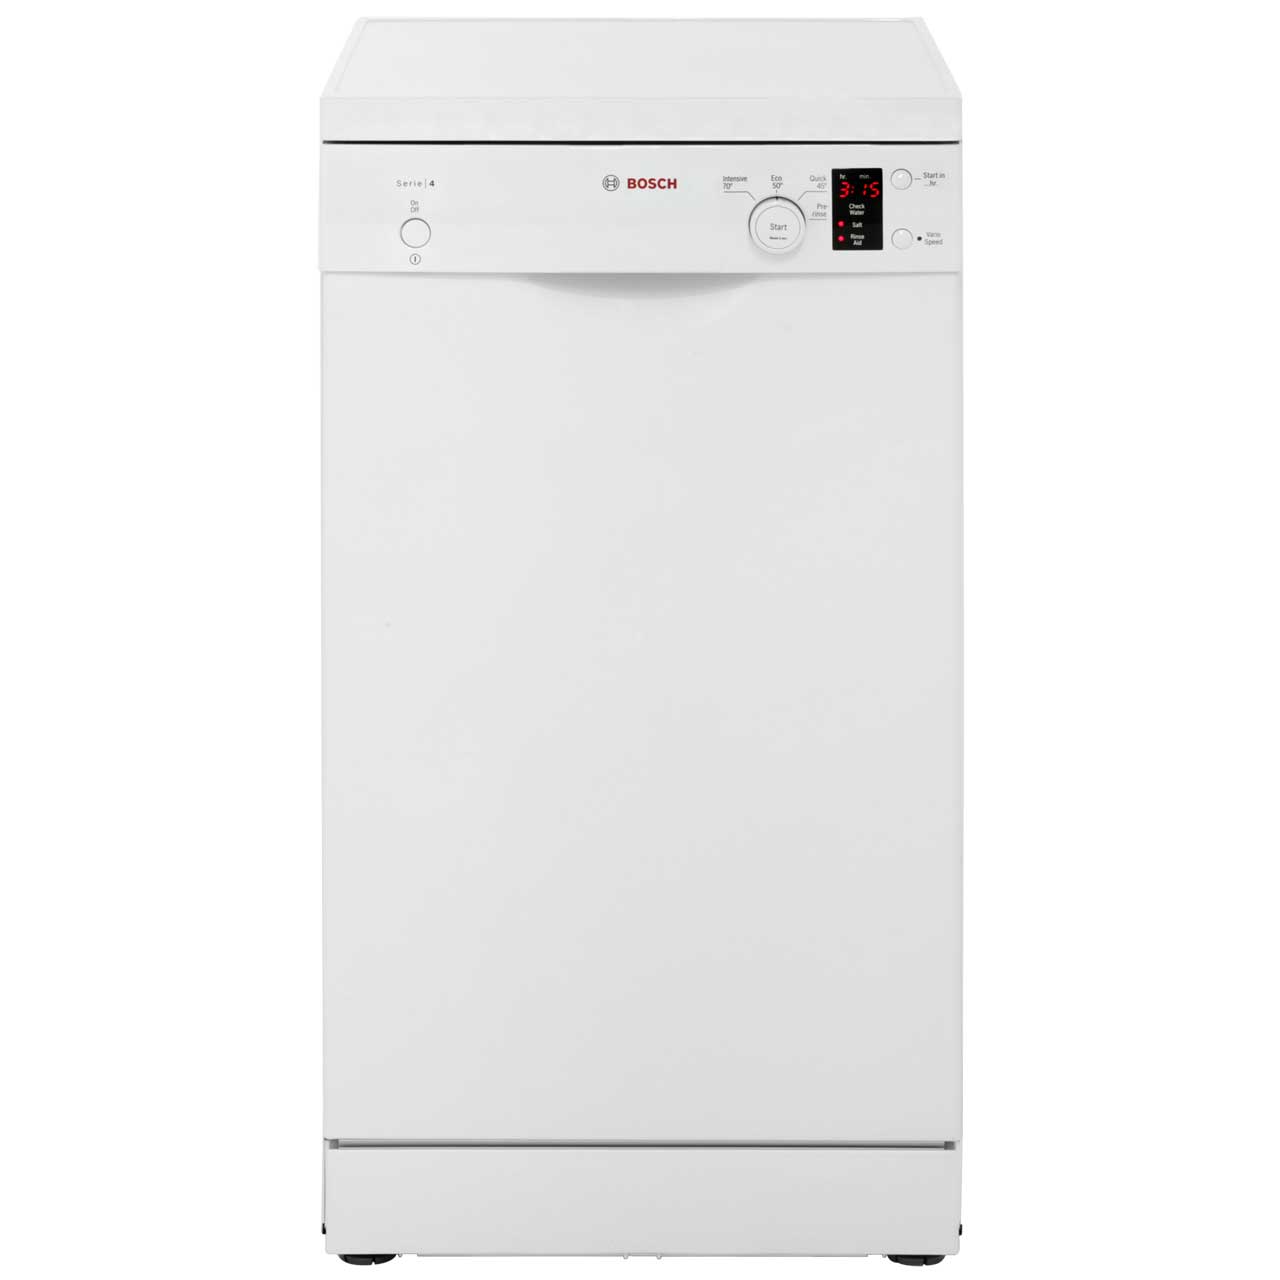 Bosch Serie 4 SPS40E12GB Free Standing Slimline Dishwasher in White